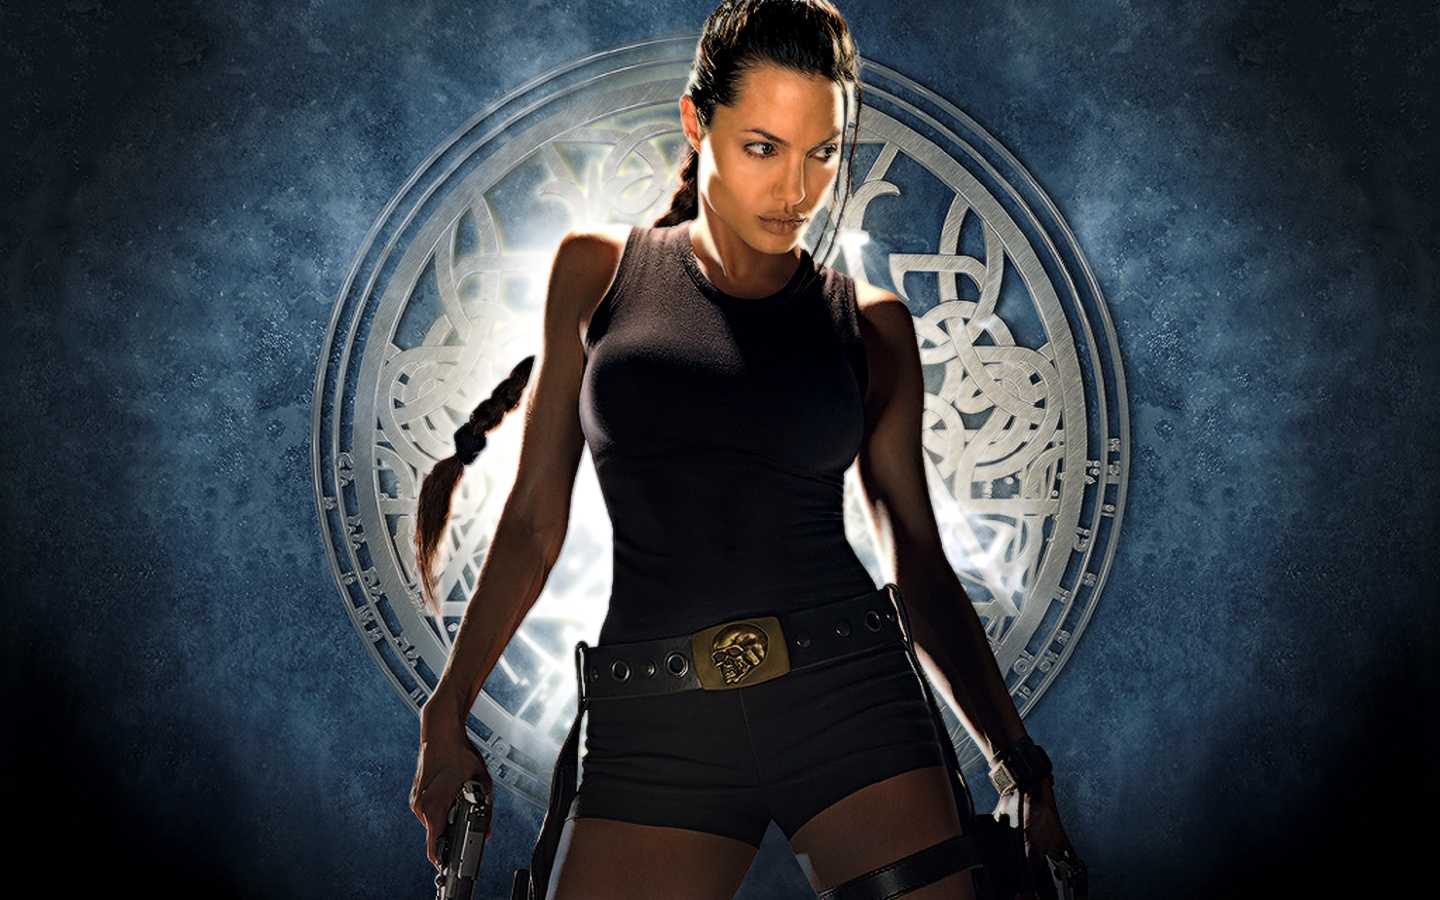 Maratona Game Movies - Tomb Raider: A Origem da Vida (2003) 